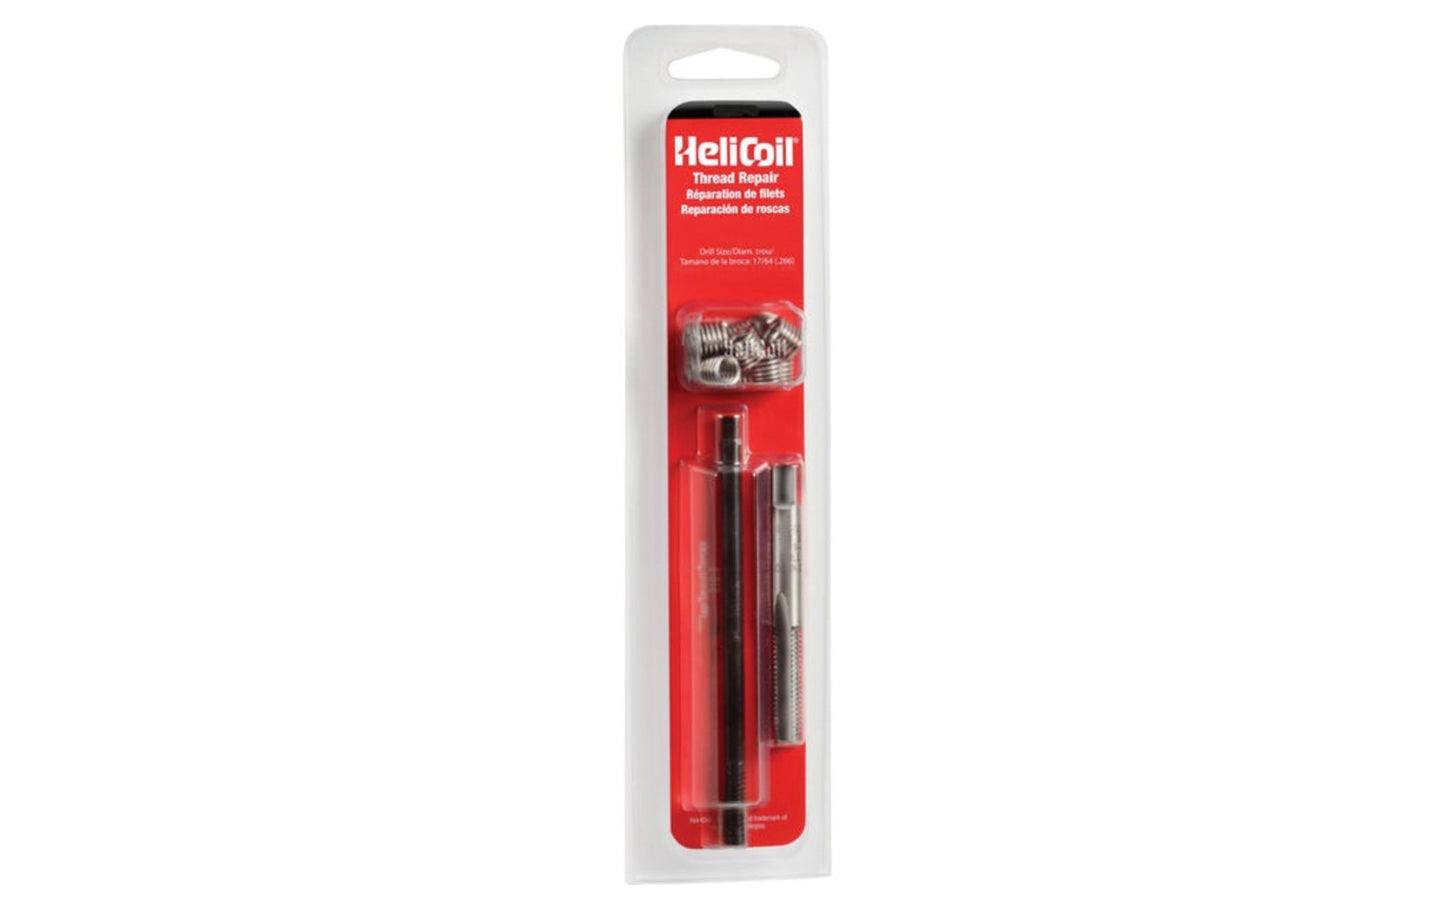 HeliCoil 7/16-14 Thread Repair Kit